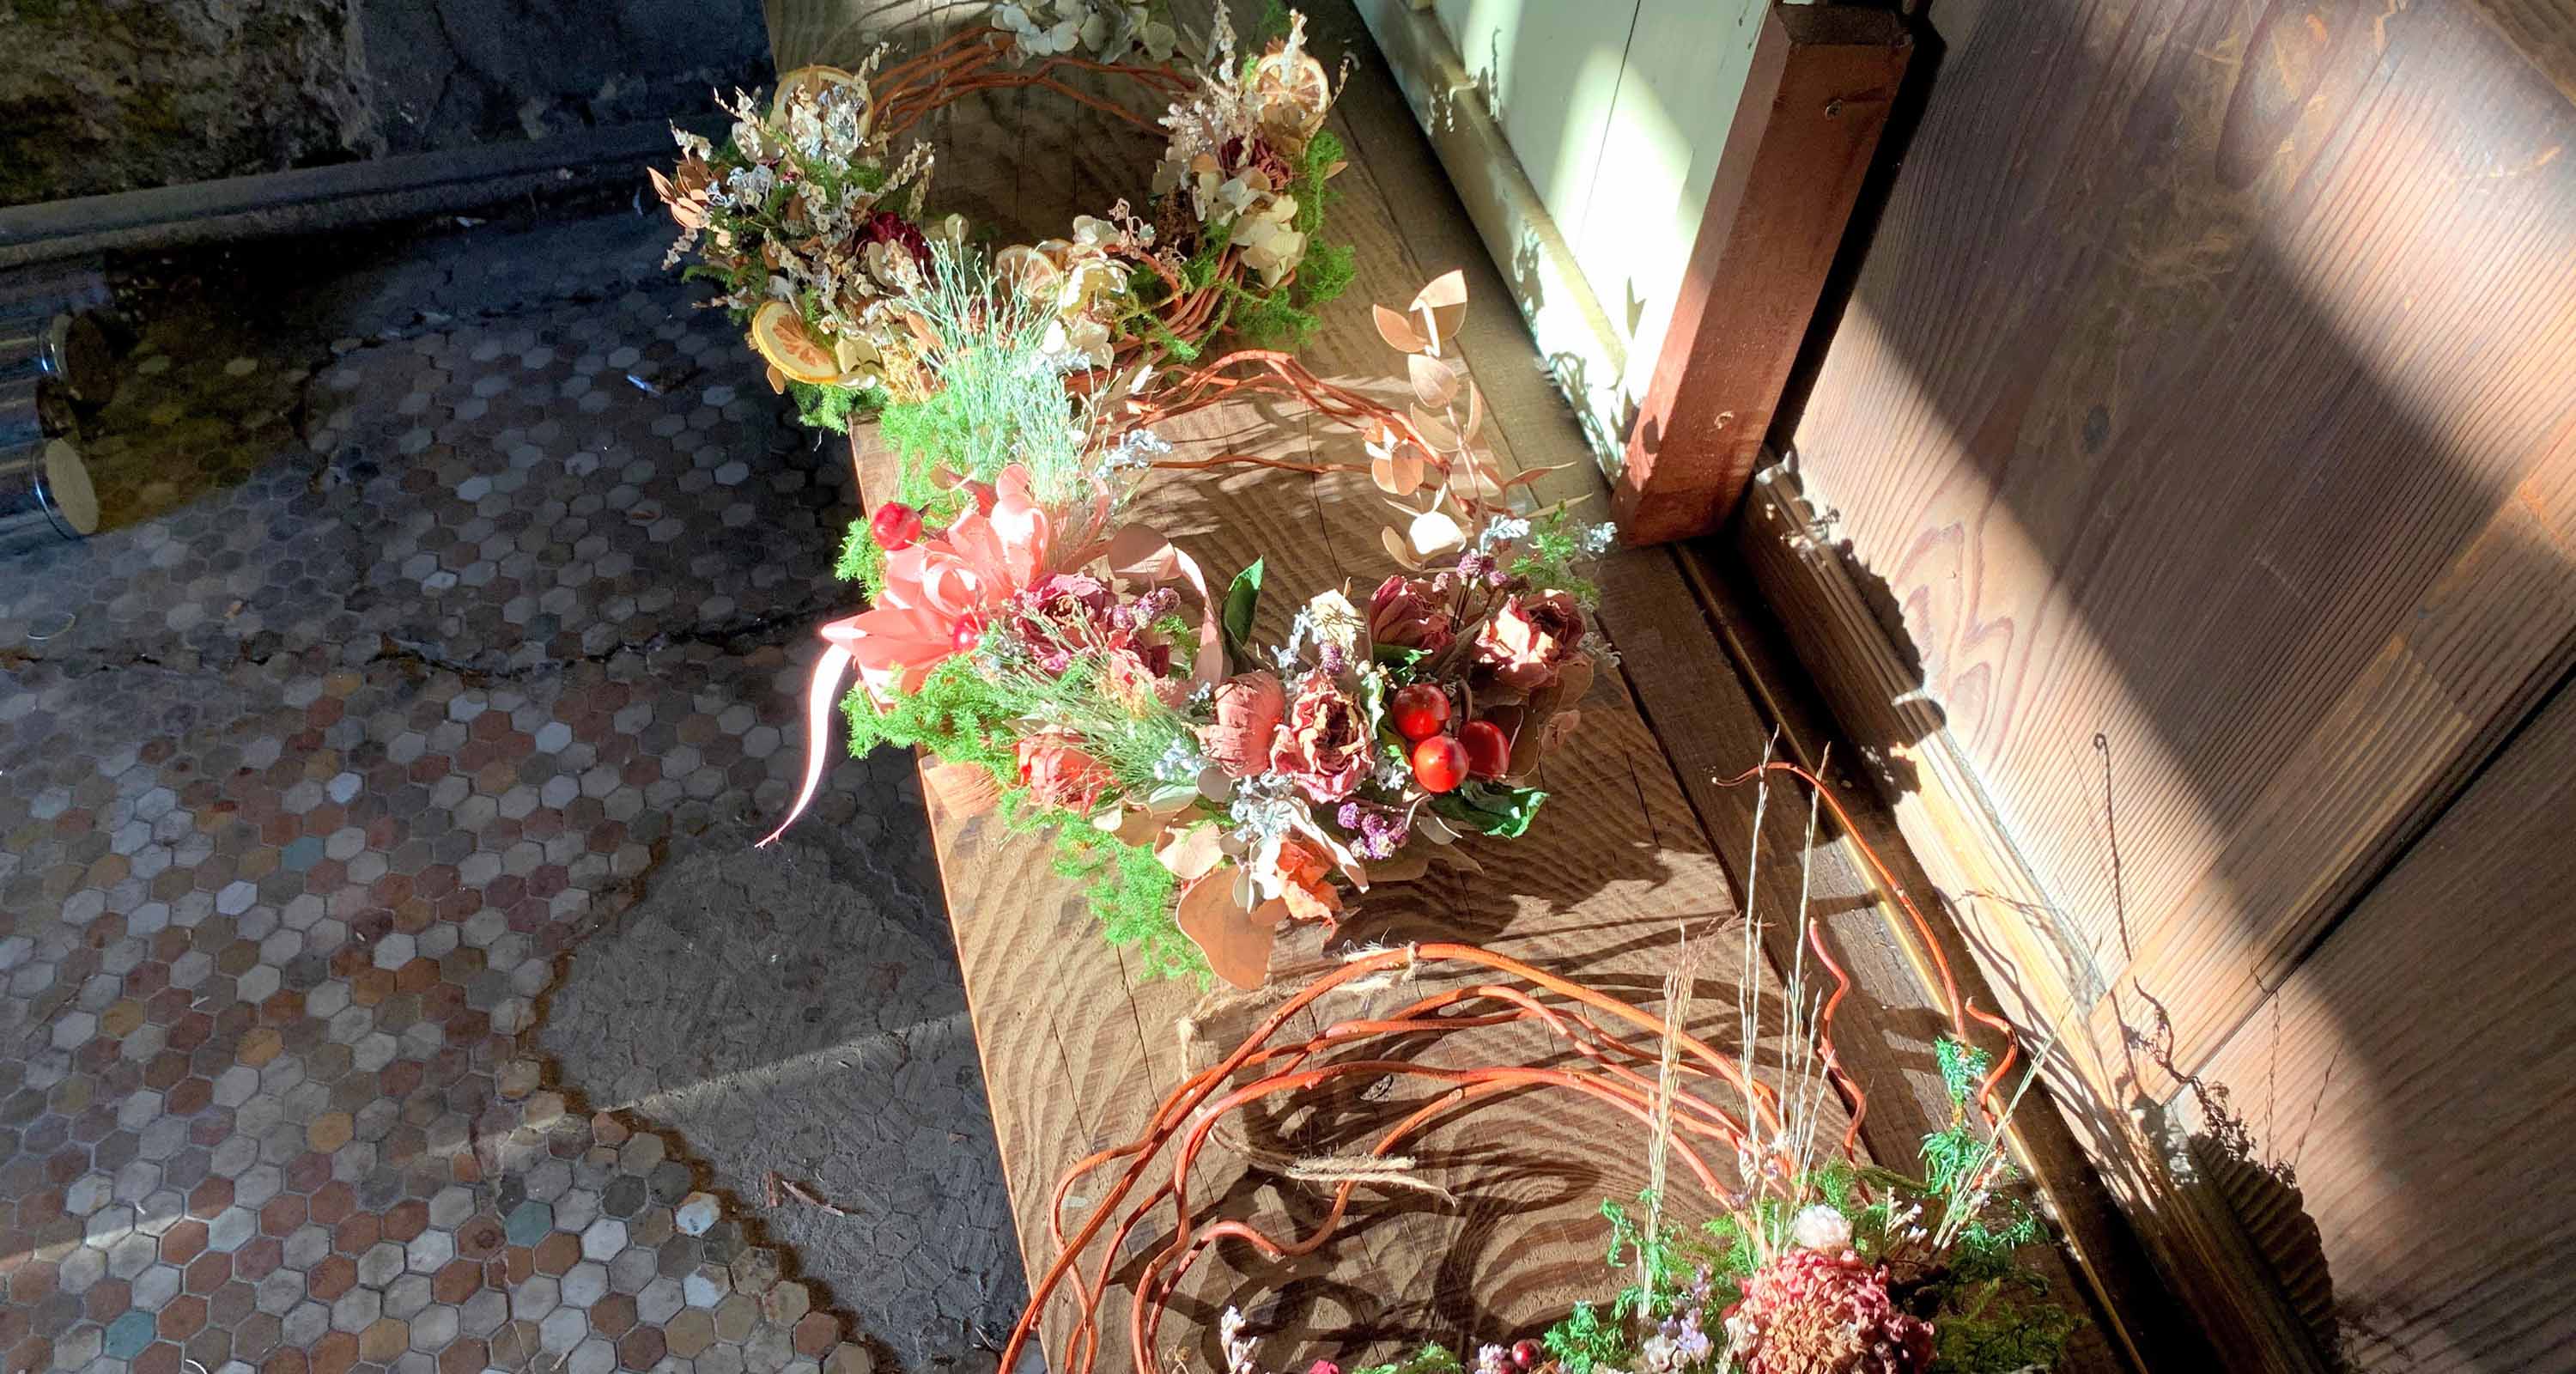 Dried Flower Wreaths